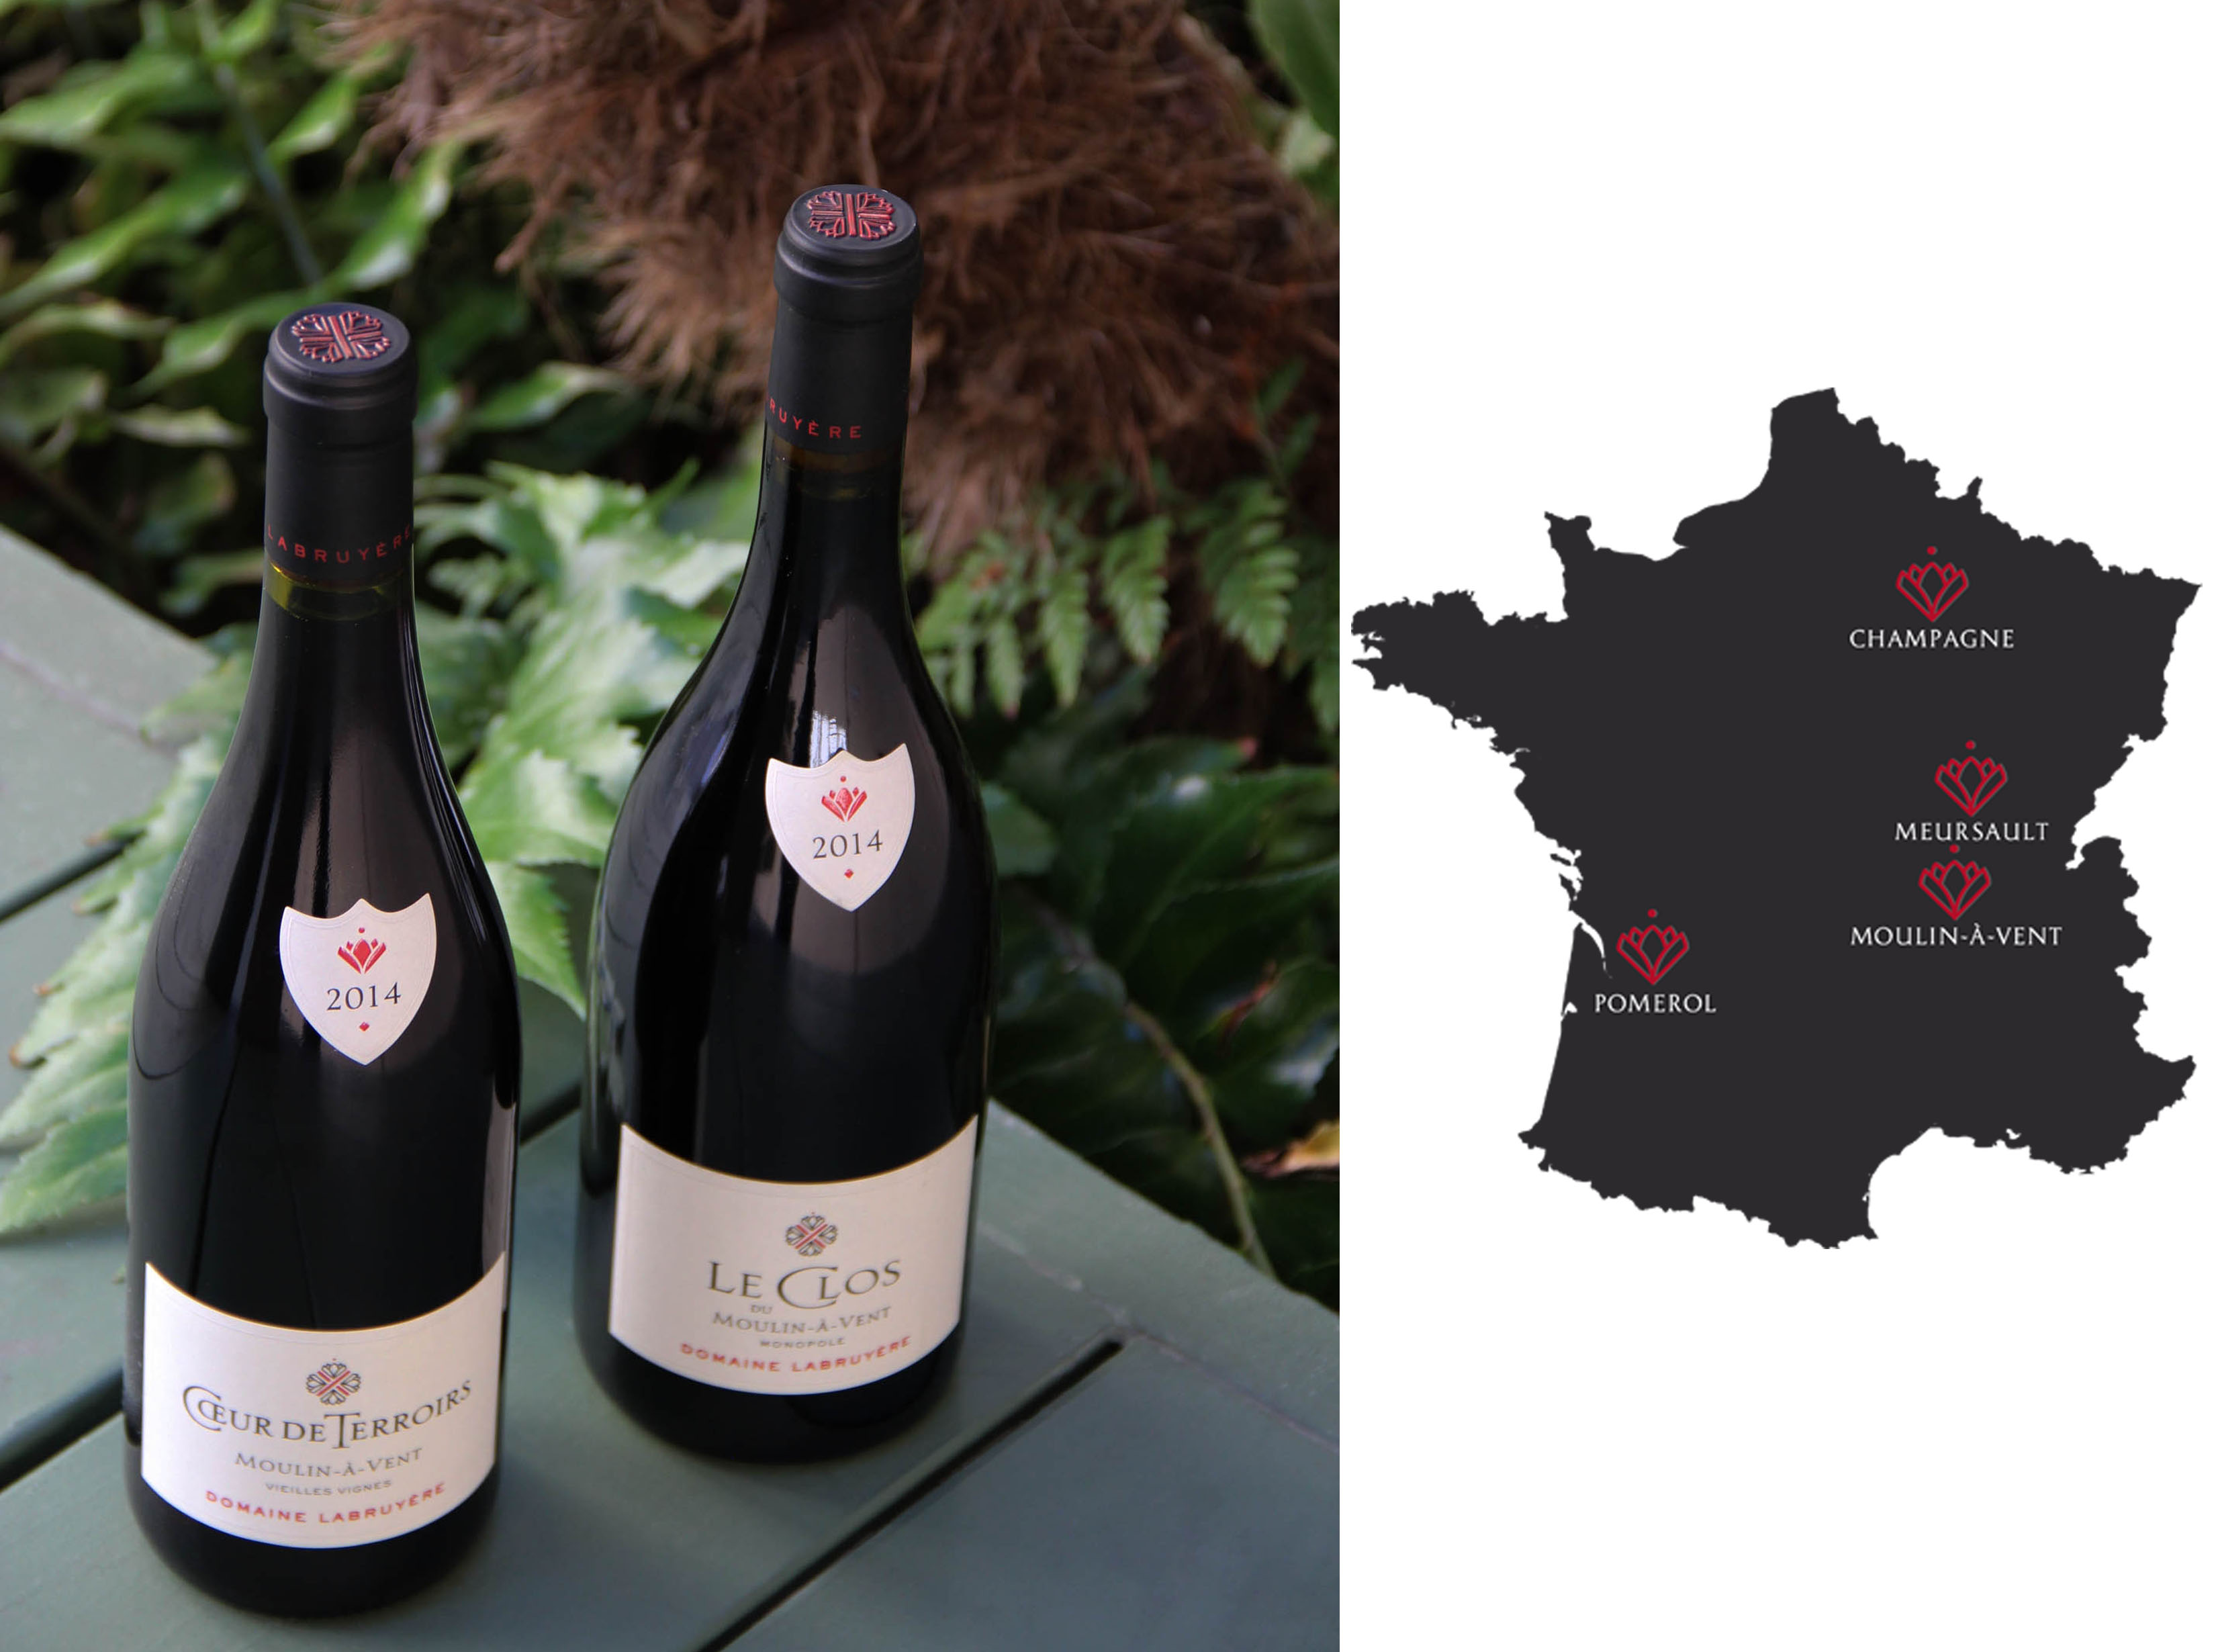 Domaine Labruyere wines & map